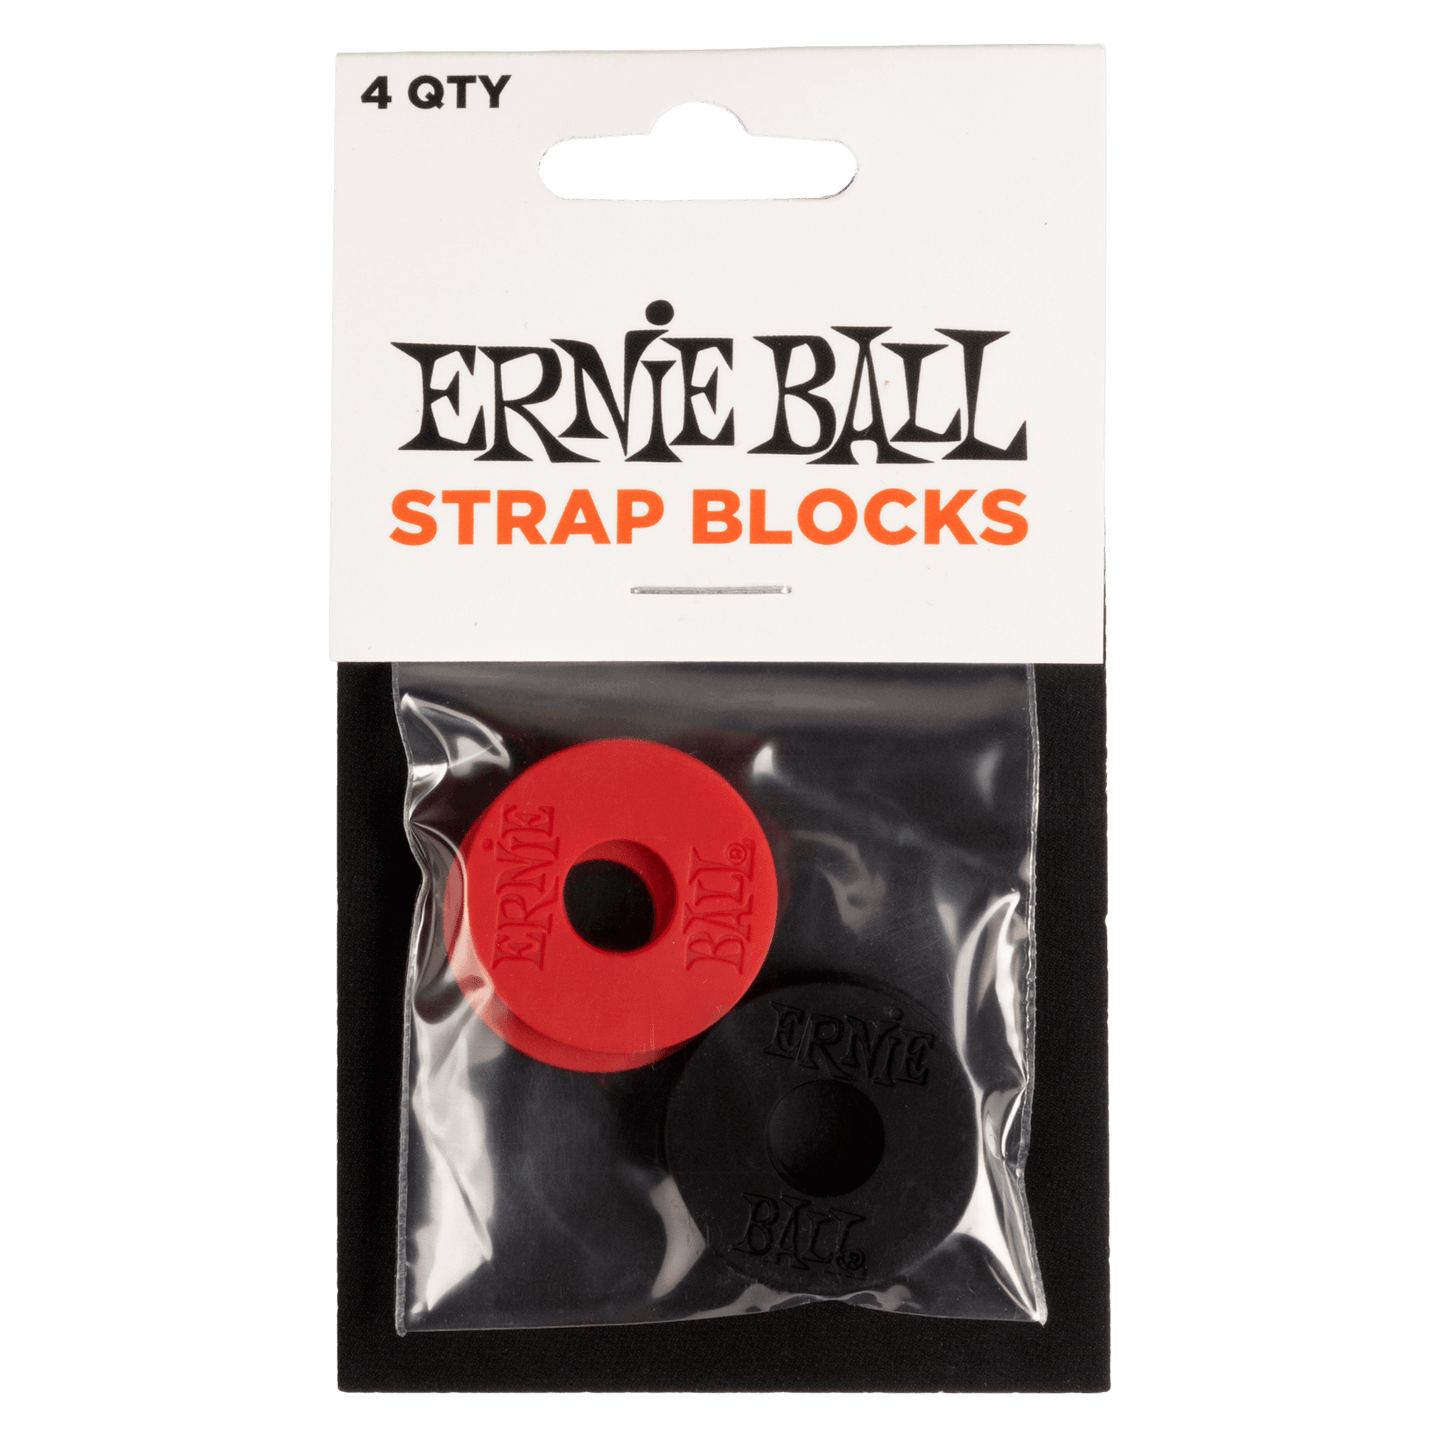 Ernie Ball Strap Blocks - Red and Black 4 pack